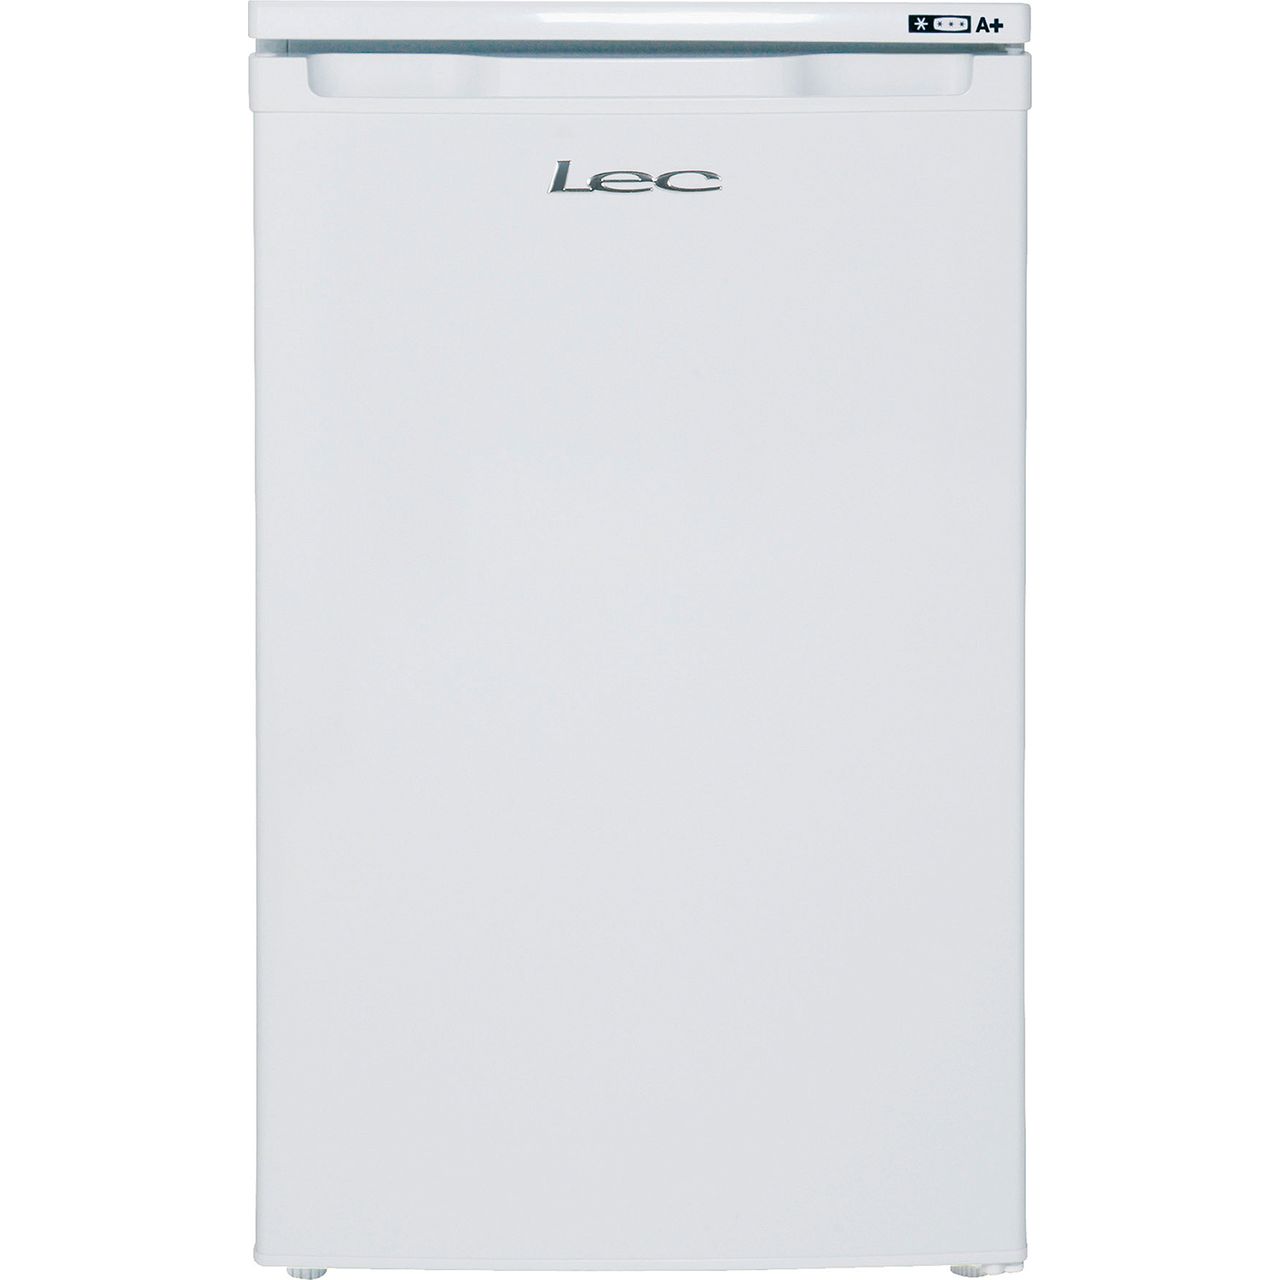 Lec U5511W.1 Under Counter Freezer Review